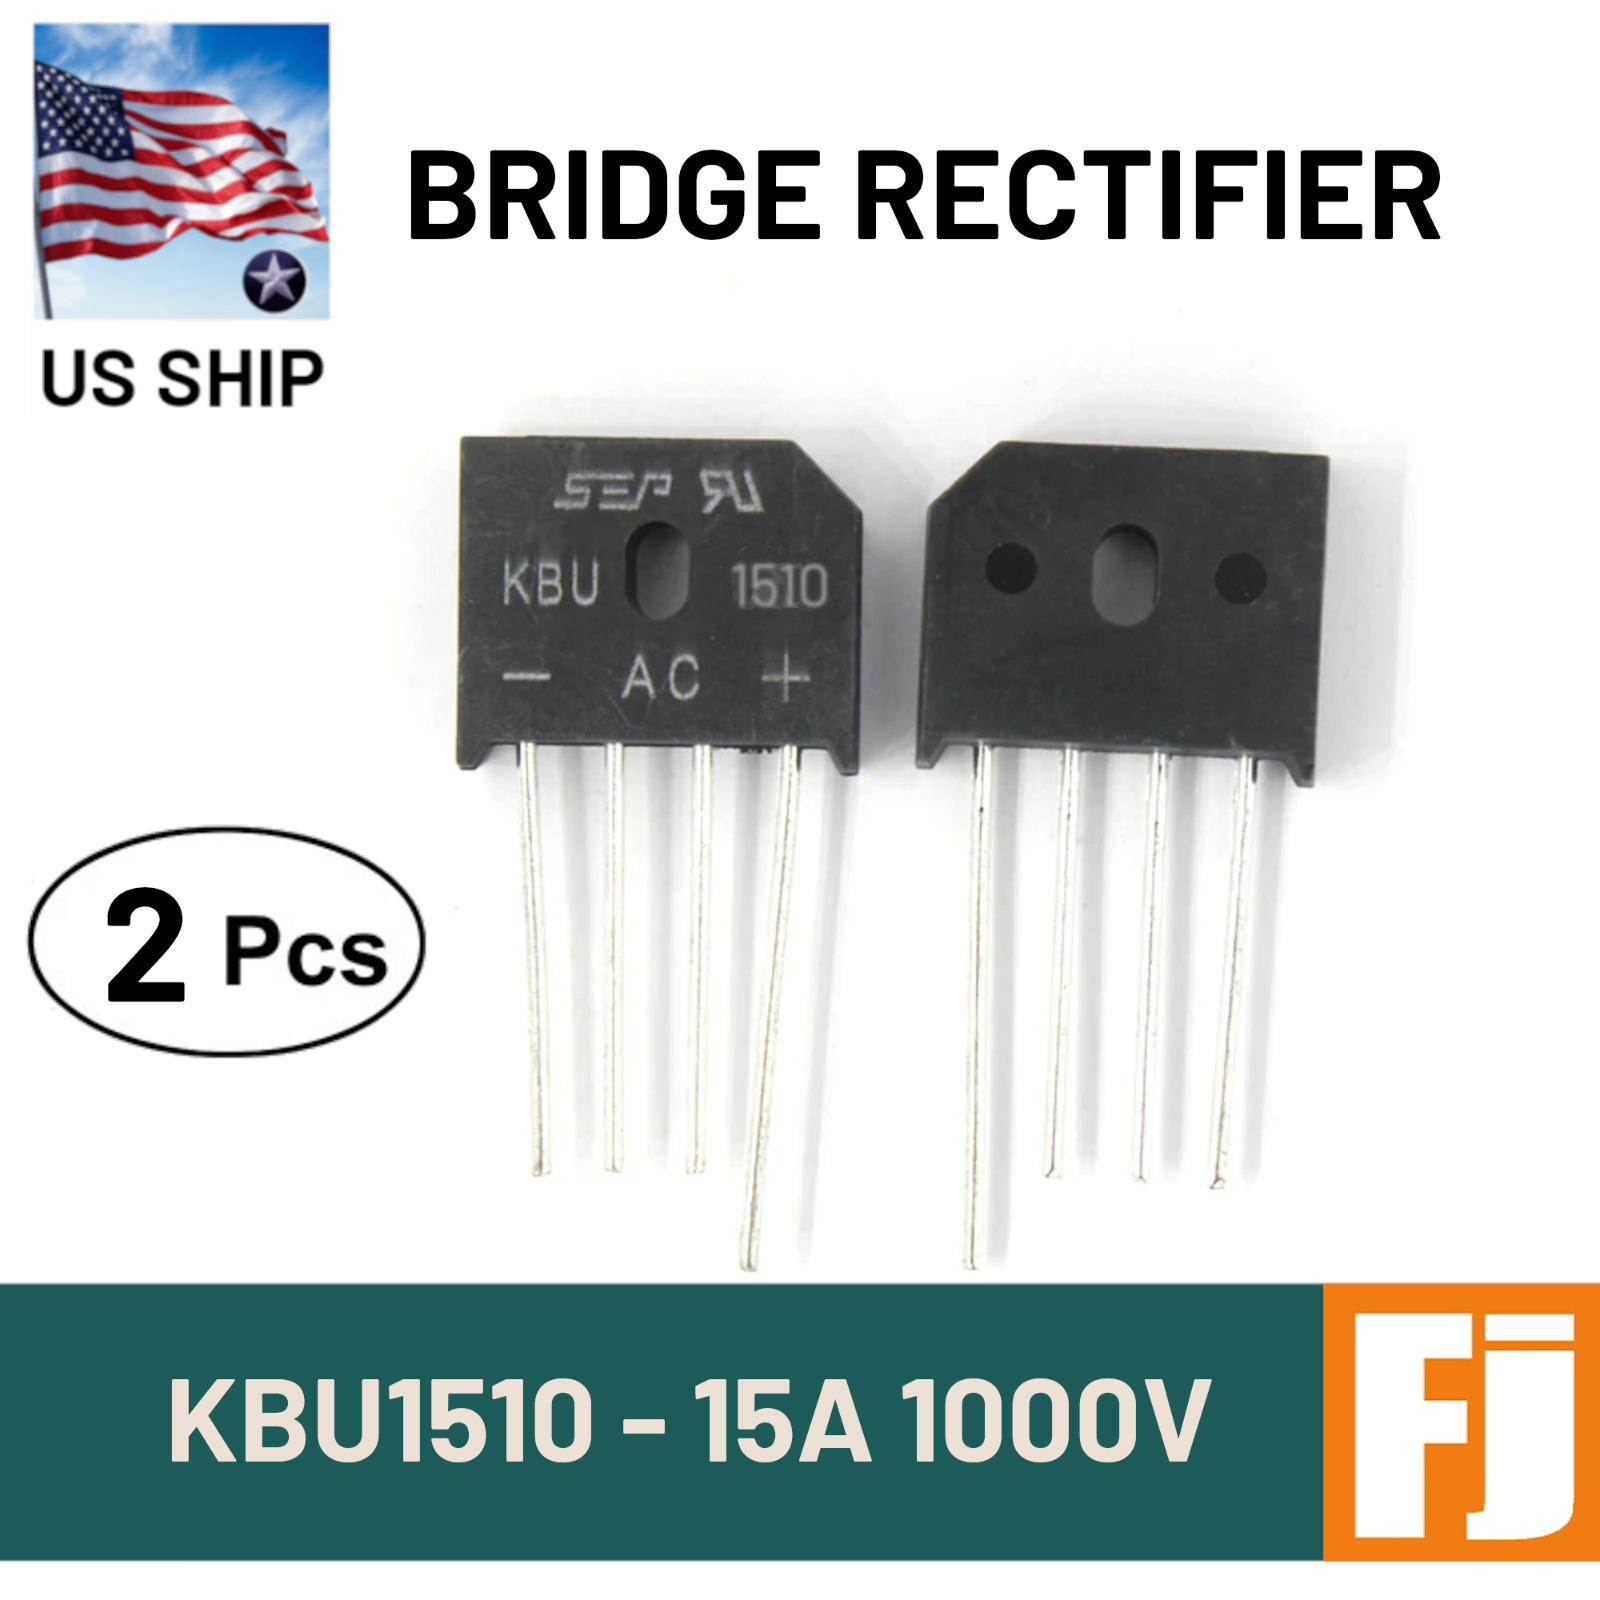 2 Pcs KBU1510 Bridge Rectifier | KBU1510 Bridge Rectifier 1000V 15A | US Ship